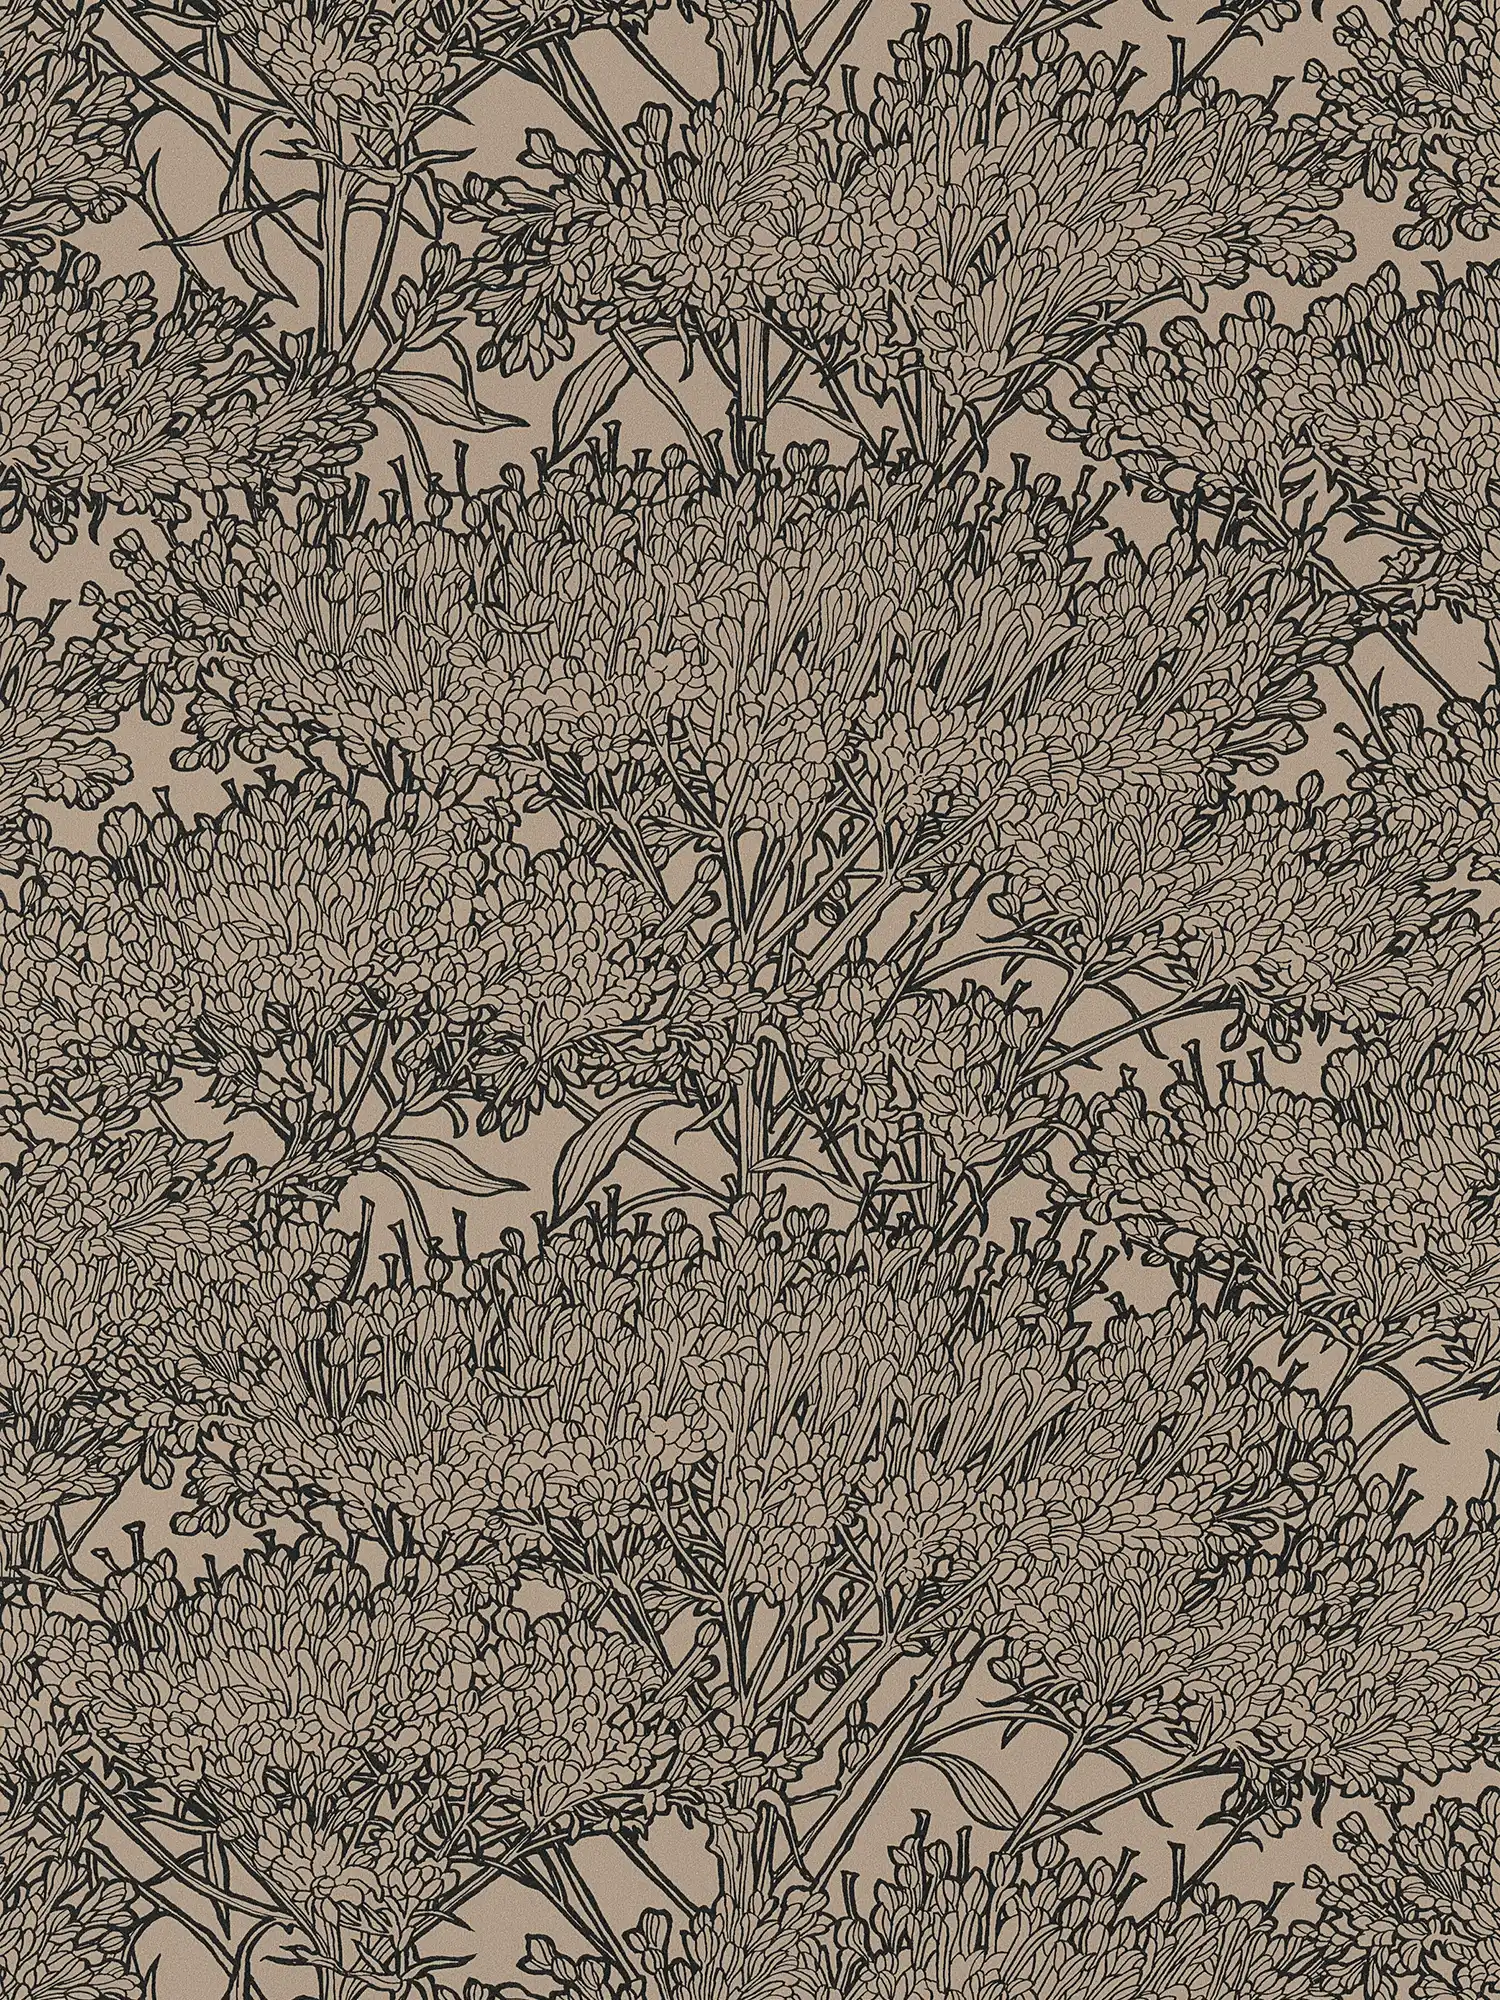 Floral wallpaper in beige with black contours - brown, grey, beige
